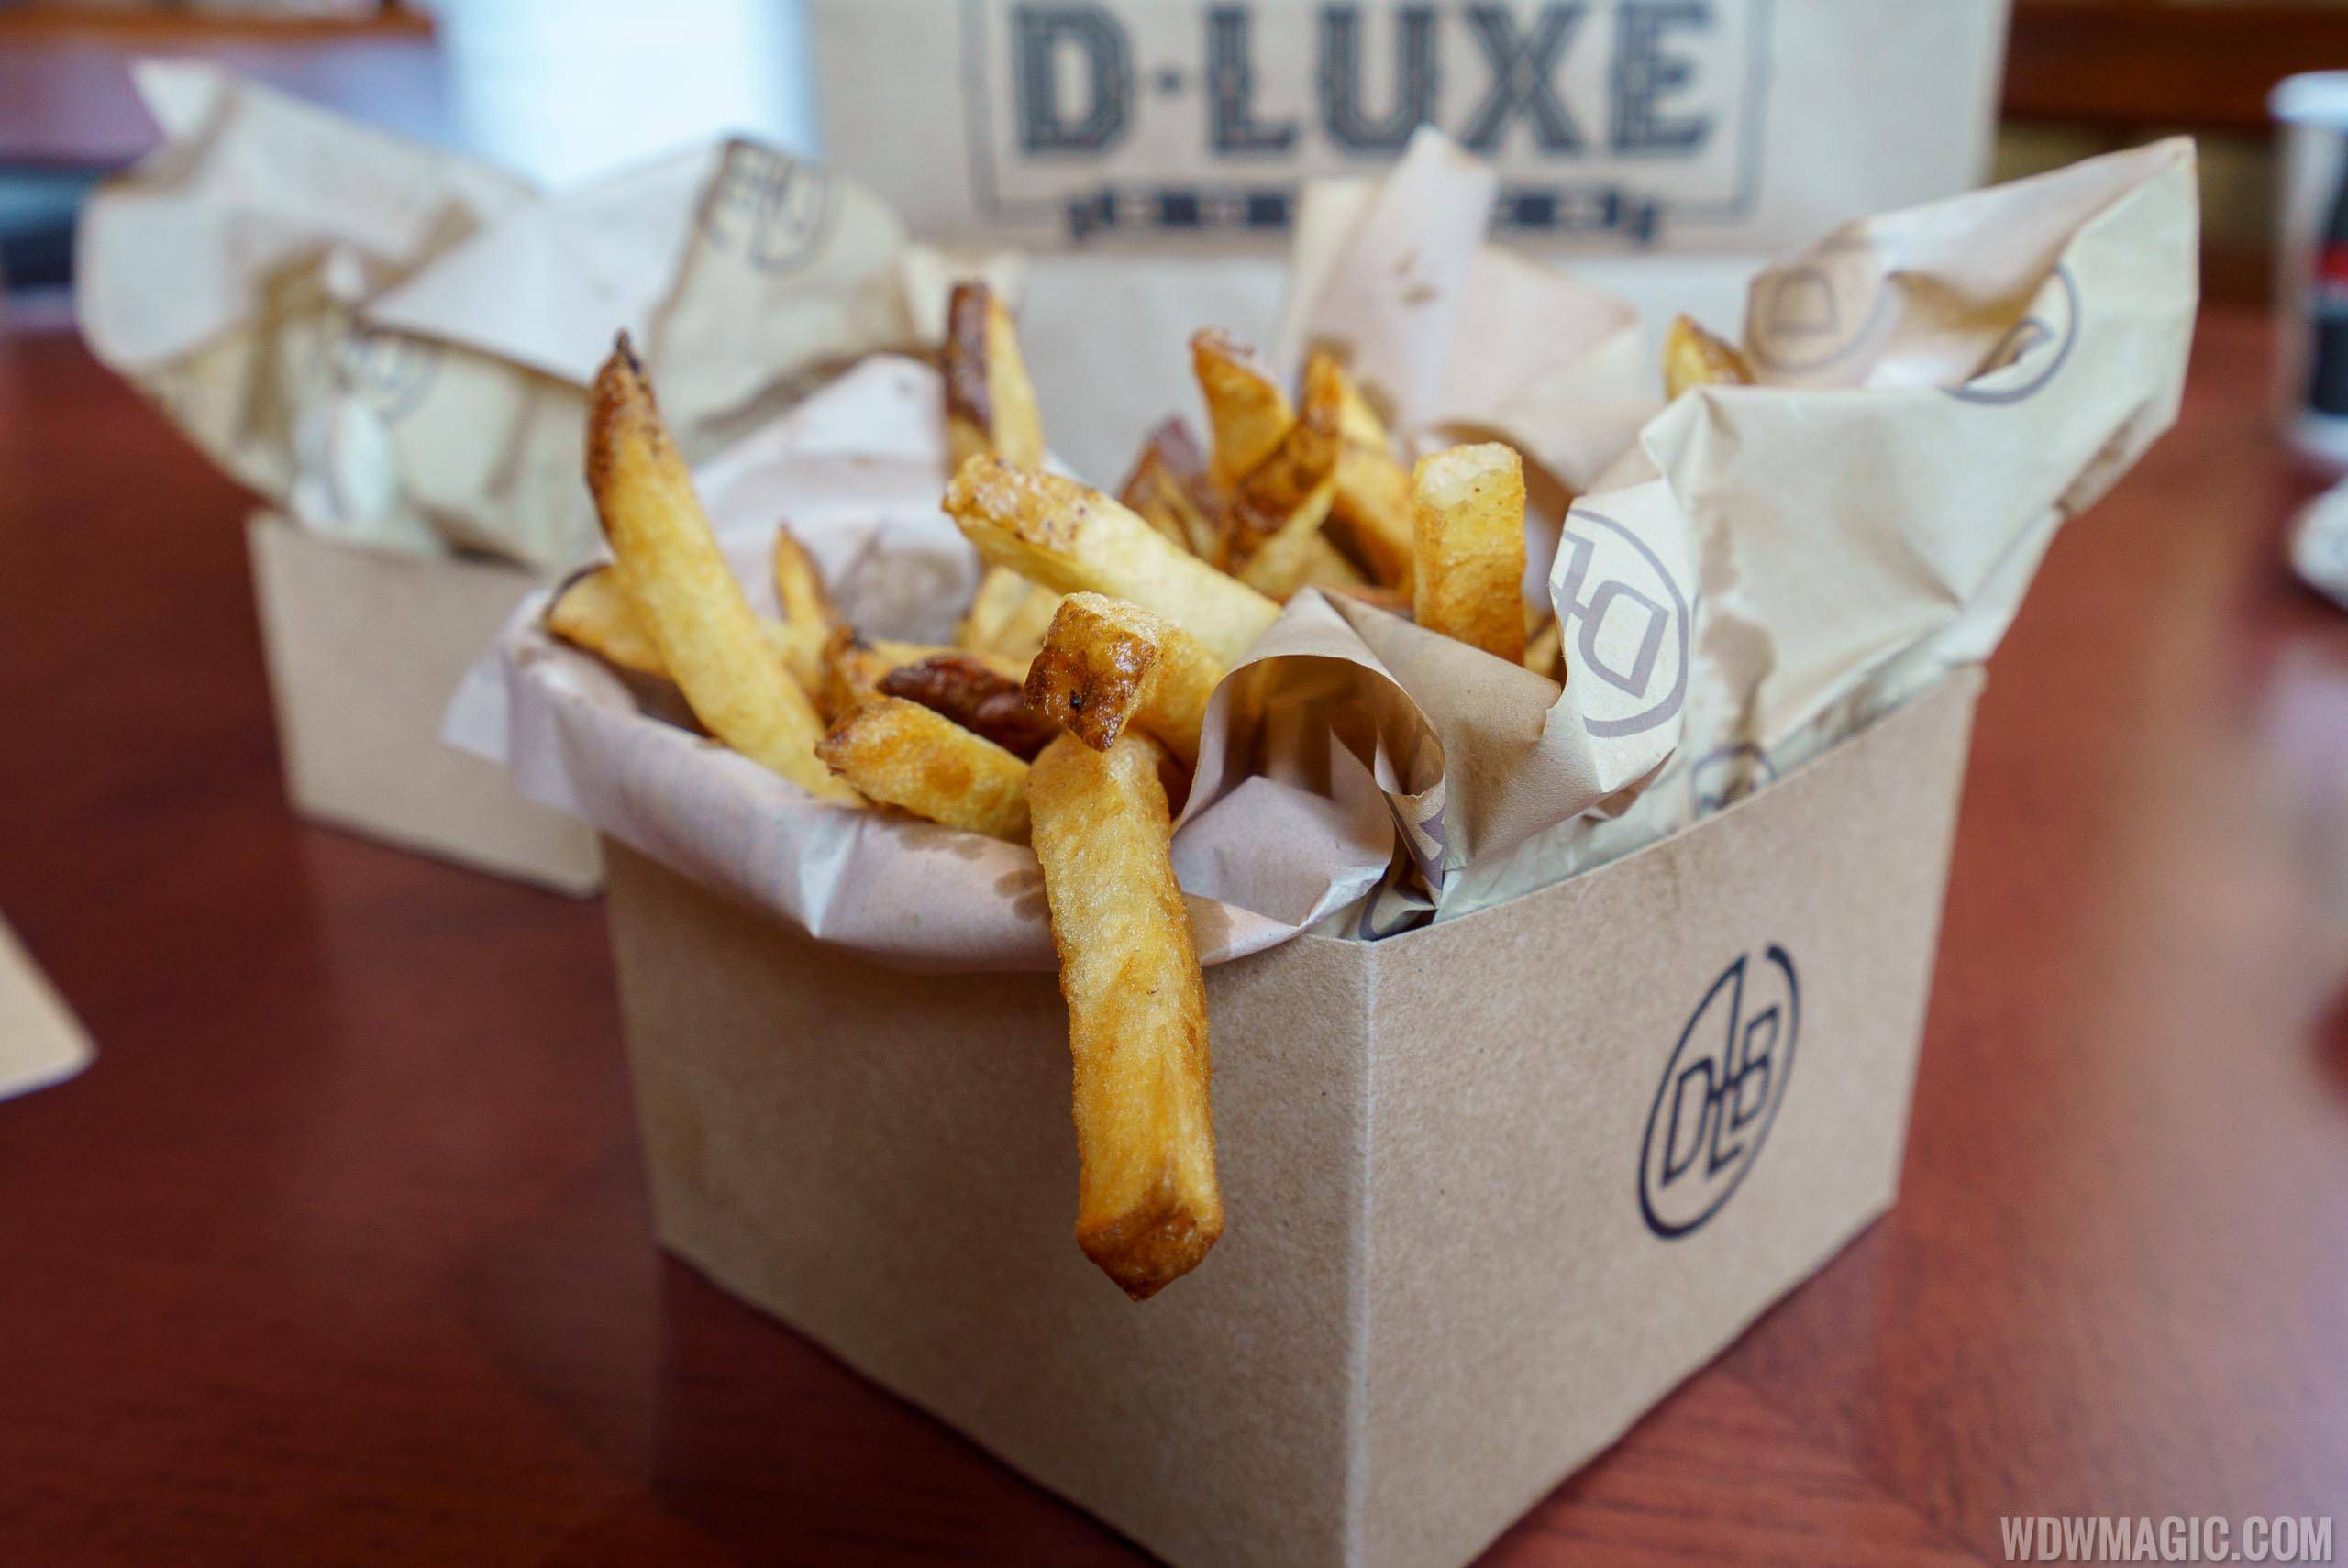 D-Luxe Burger - Large Fresh-Cut Fries